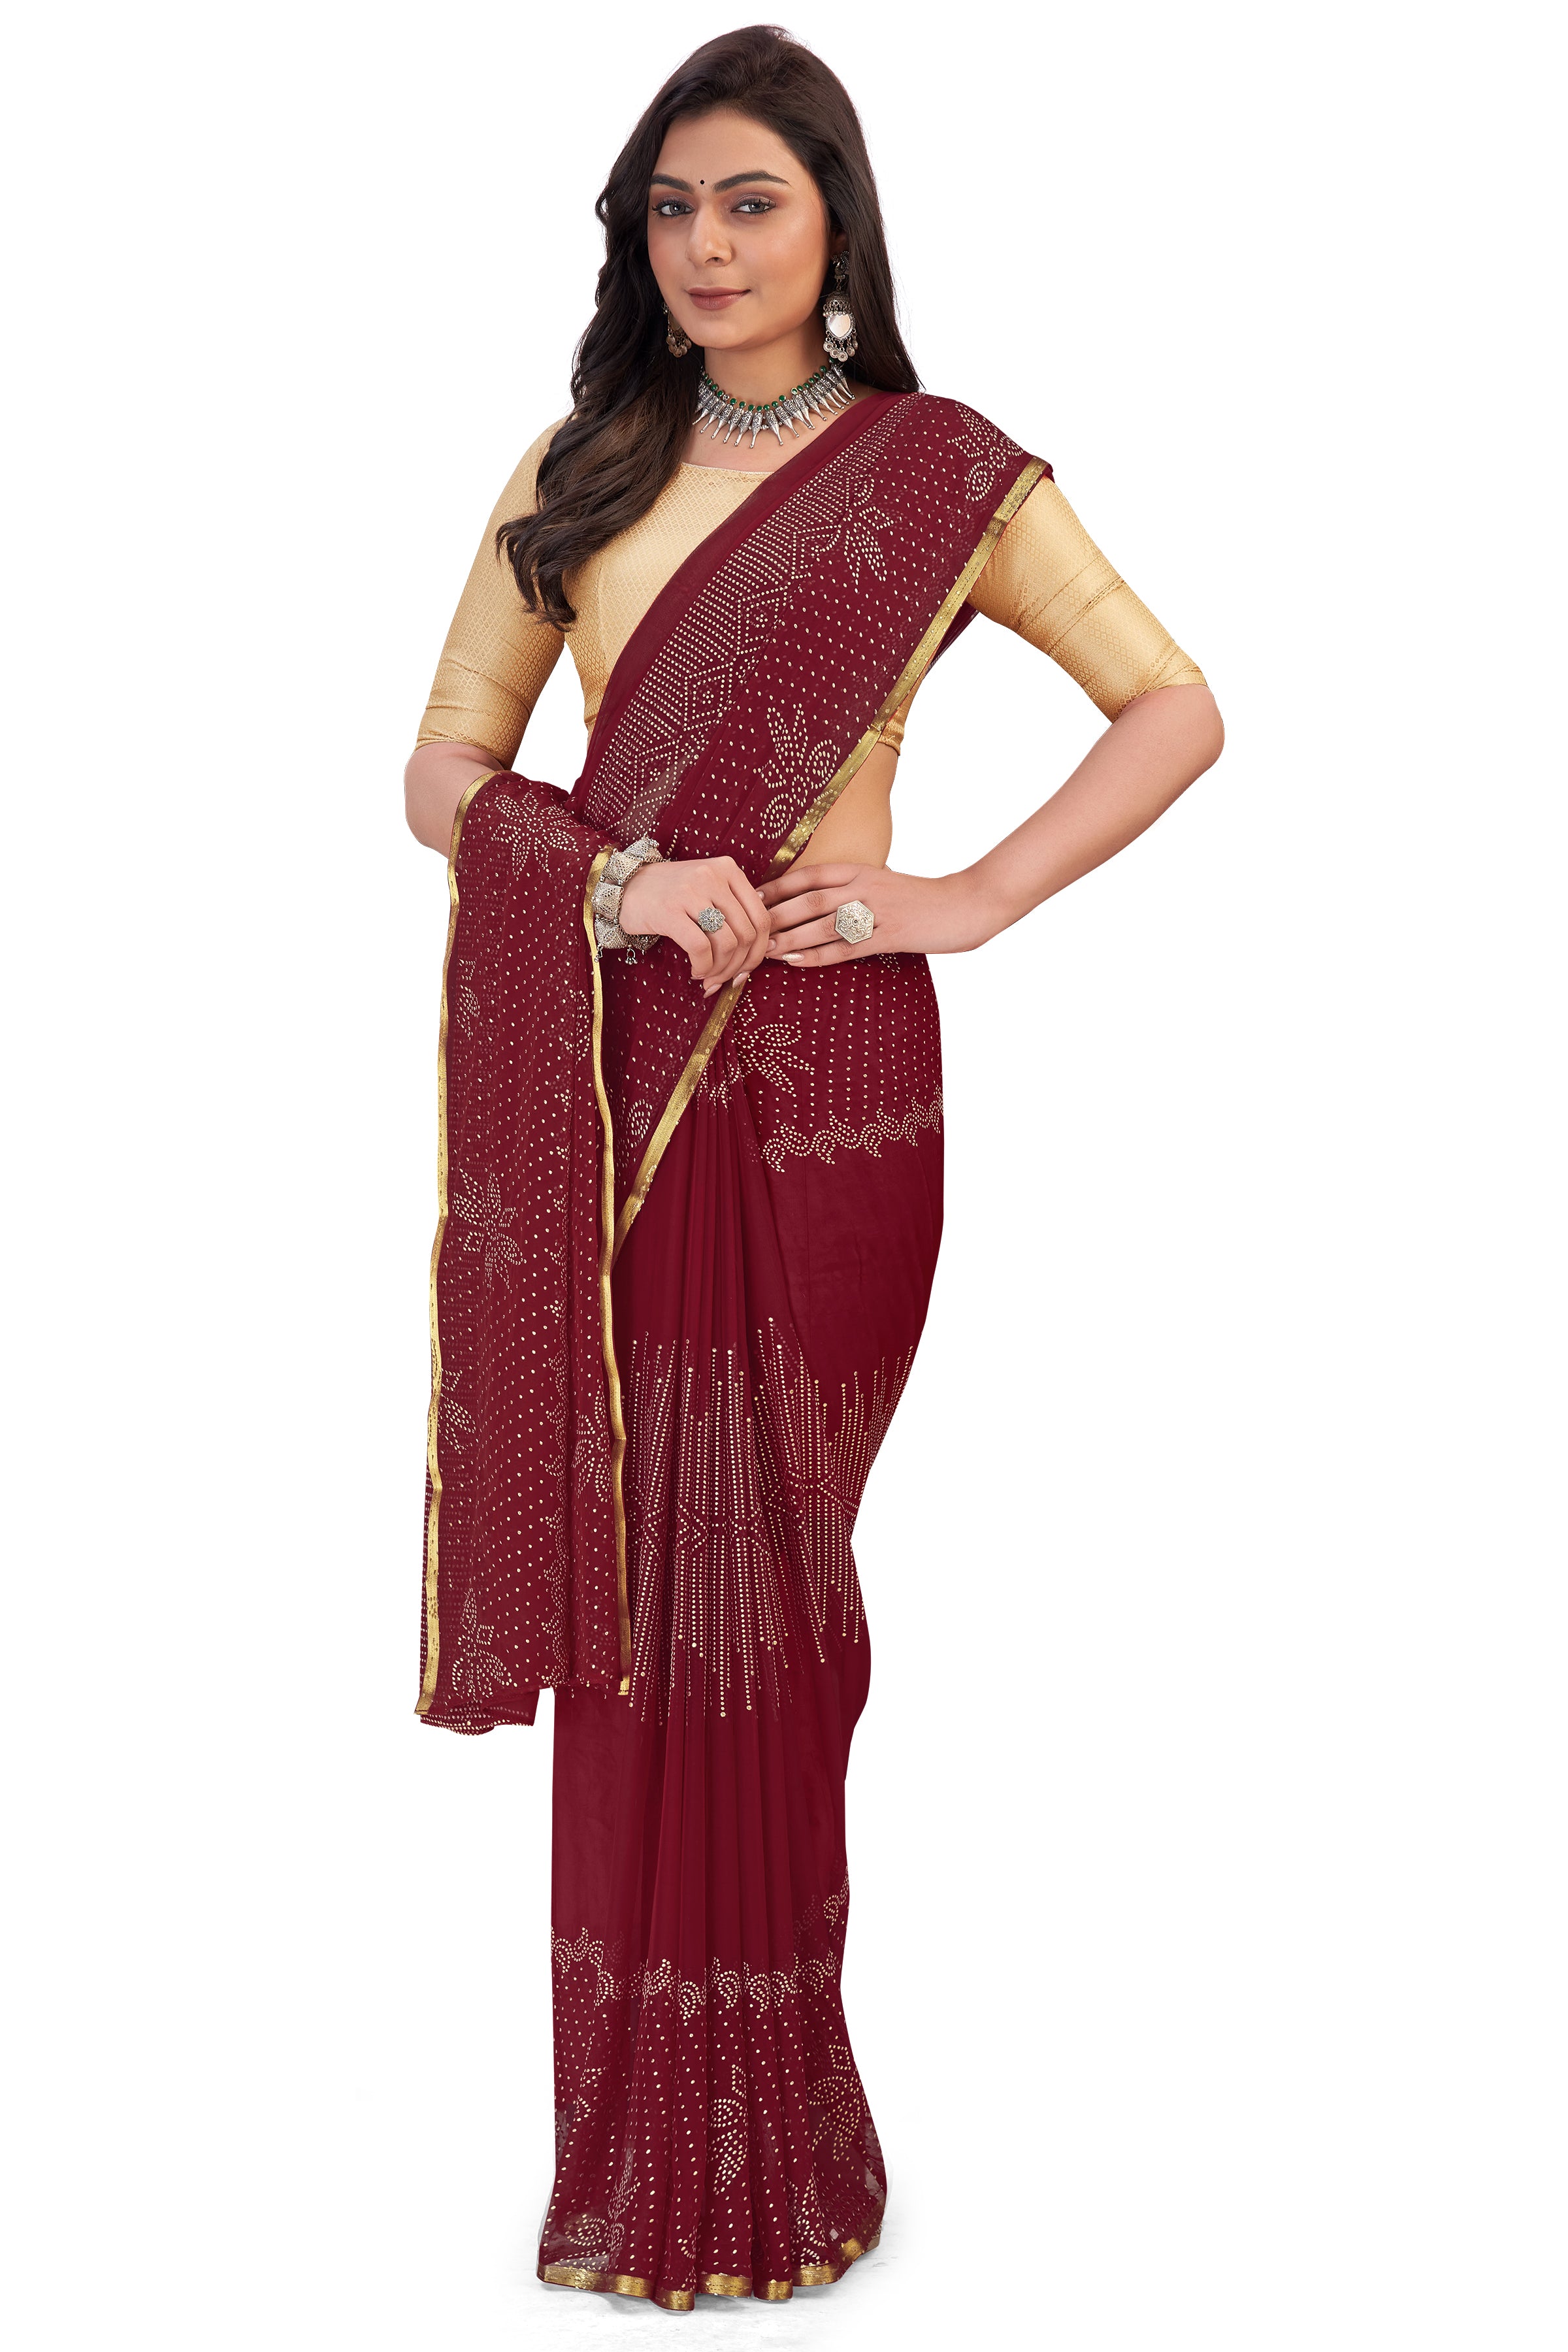 Women's Bandhani Daily Wear Chiffon Sari With Blouse Piece (Maroon) - NIMIDHYA